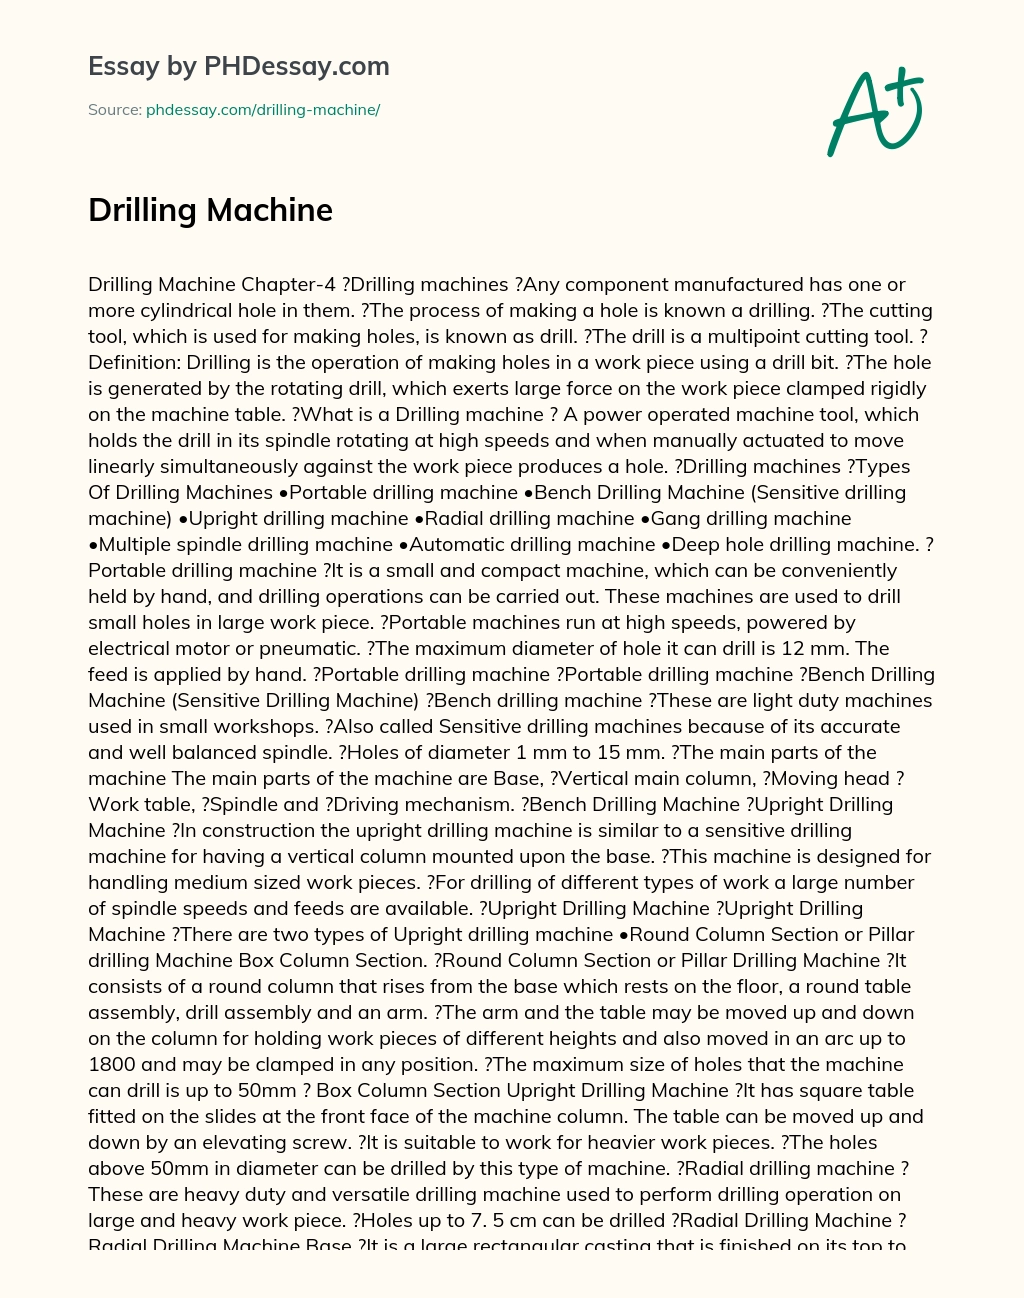 Drilling Machine essay